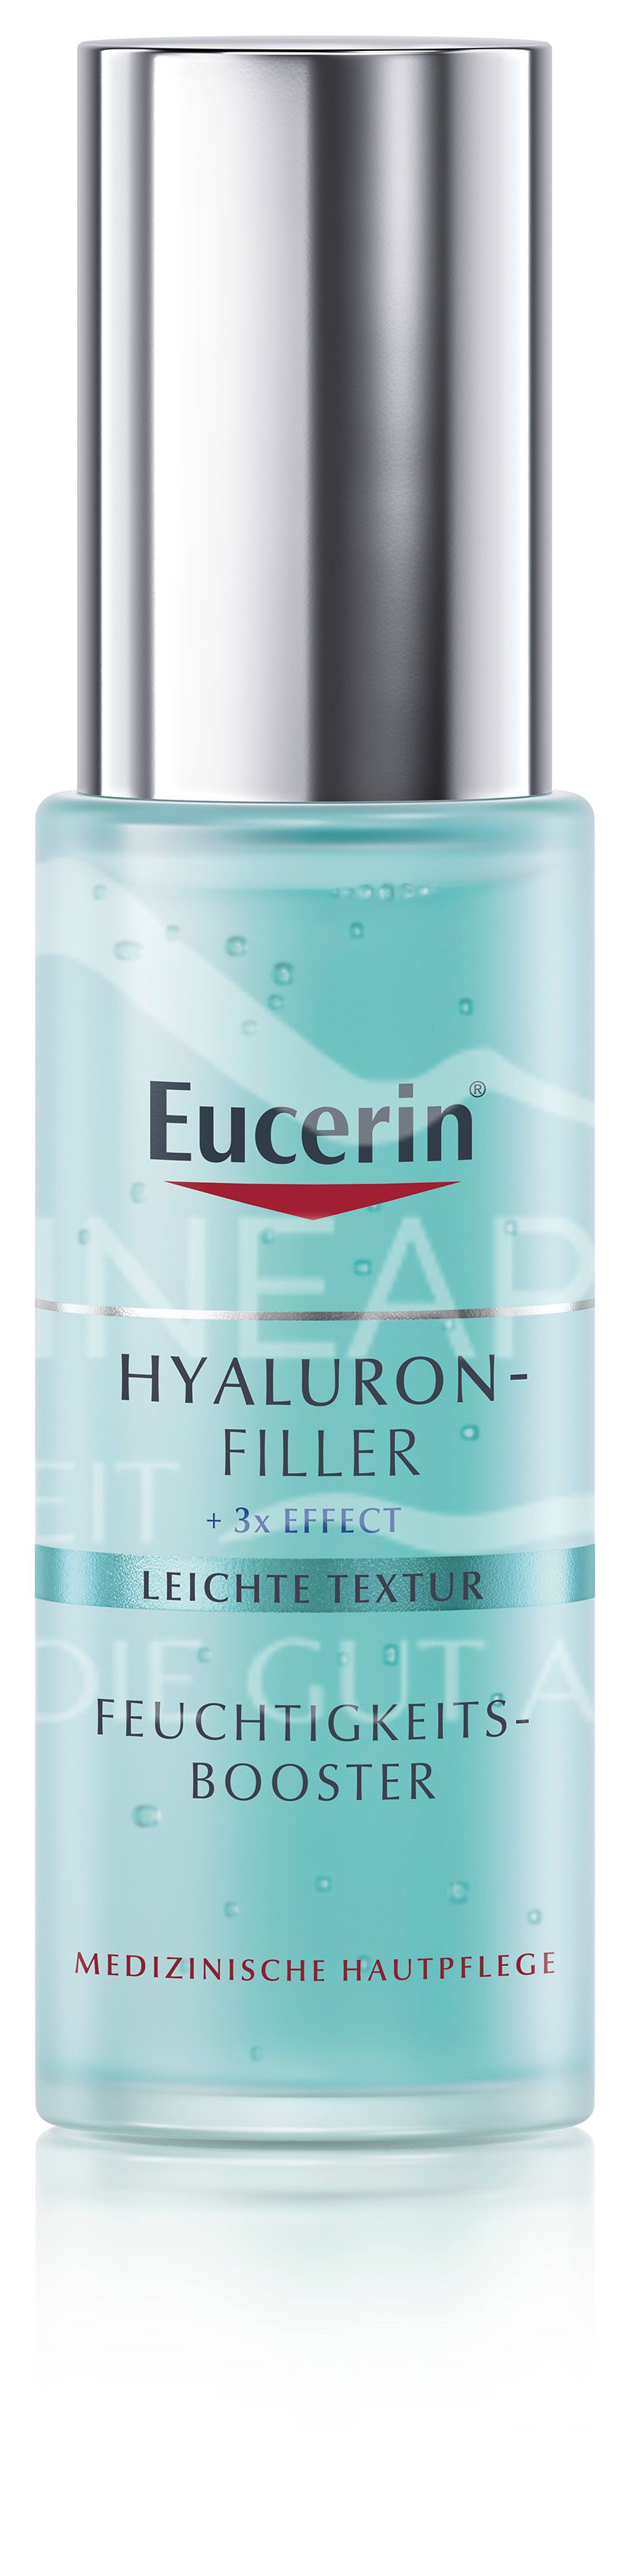 Eucerin® HYALURON-FILLER Feuchtigkeits-Booster